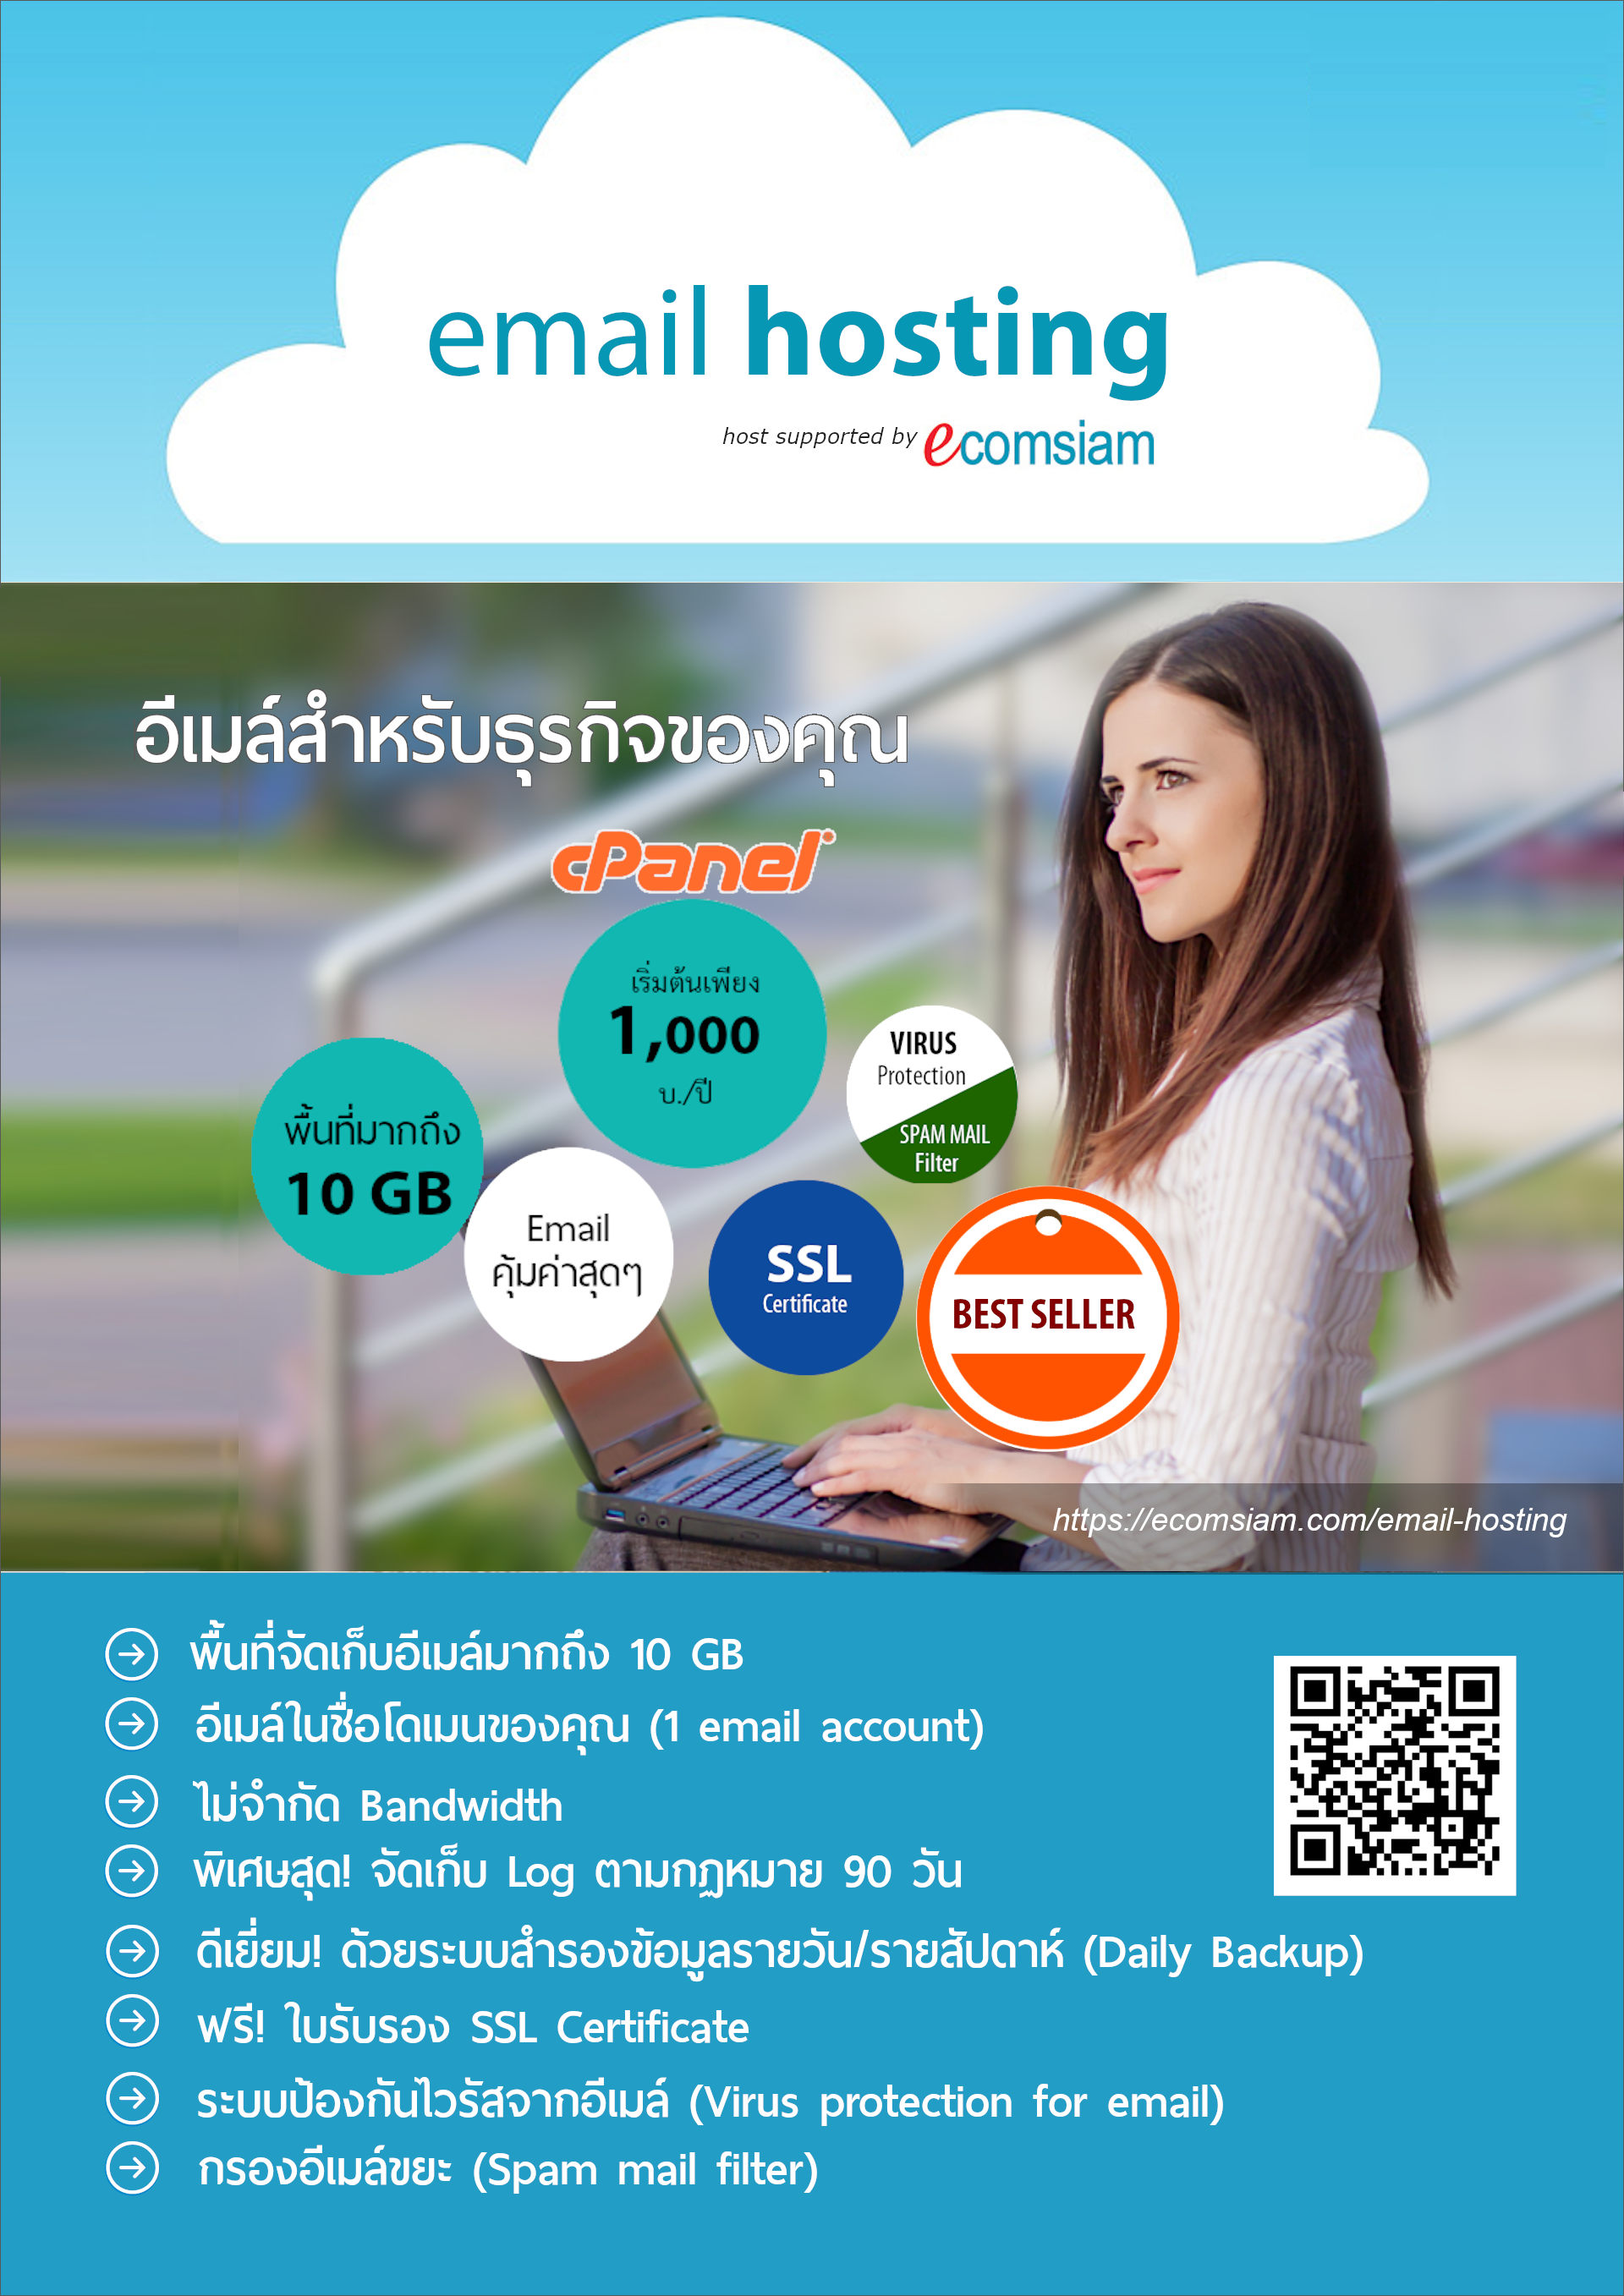 โบรชัวร์แนะนำบริการ  email Hosting thai คุณภาพ บริการดี พื้นที่มาก  คุณภาพสูง  hosting พื้นที่มาก บริการดี  ฟรี SSL ระบบควบคุมจัดการ Web hosting ไทย ด้วย Cpanel ที่ง่าย สะดวก และปลอดภัย hosting เพื่อใช้งานอีเมล์ สำหรับธุรกิจของคุณ มีระบบเก็บ log file ตามกฏหมาย มีความปลอดภัยในการใช้งาน พร้อมมีระบบสำรองข้อมูลรายวัน (daily backup) และ สำรองข้อมูลรายสัปดาห์ (weekly backup) ระบบป้องกันไวรัสจากอีเมล์ (virus protection) พร้อมระบบกรองสแปมส์เมล์หรือกรองอีเมล์ขยะ (Spammail filter) เริ่มต้นเพียง 1000 บาทต่อปี   พื้นที่ 10 GB 1 email สอบถามรายละเอียดเพิ่มเติม  โทร.หาเราตอนนี้เลย  02-9682665 หรือ line : @ecomsiam โฮสติ้งคุณภาพ บริการลูกค้าดี ดูแลดี  แนะนำเว็บโฮสติ้ง โดย thailandwebhost.com